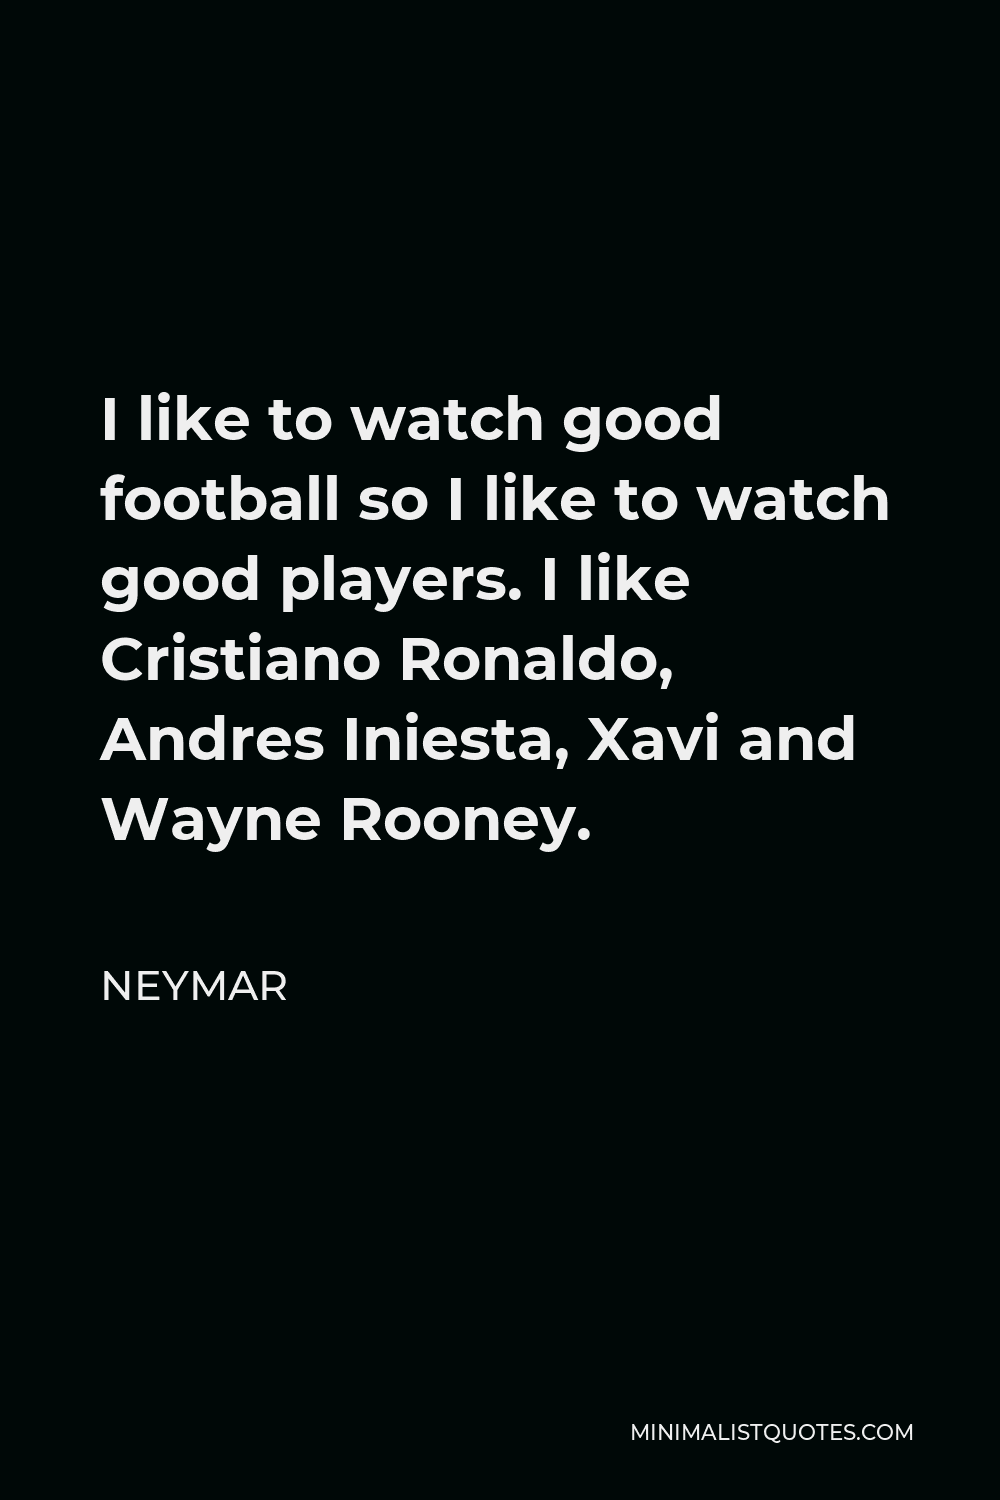 Neymar Quote - I like to watch good football so I like to watch good players. I like Cristiano Ronaldo, Andres Iniesta, Xavi and Wayne Rooney.